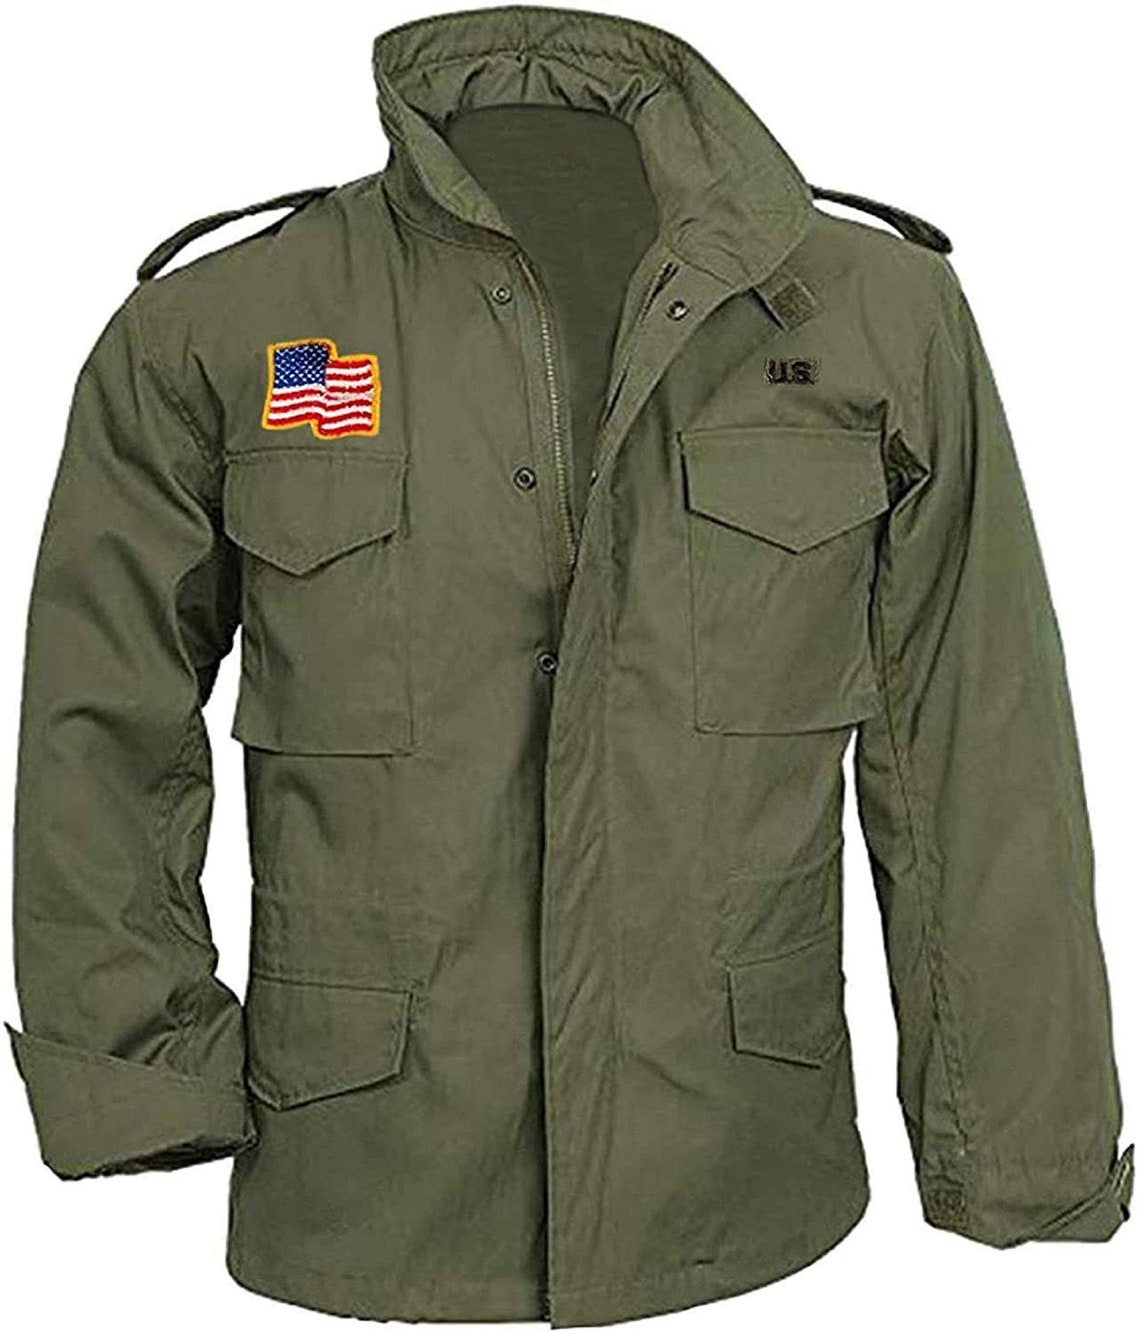 US Army M65 Military Tank Vintage Camouflage Uniform Shirt | Etsy